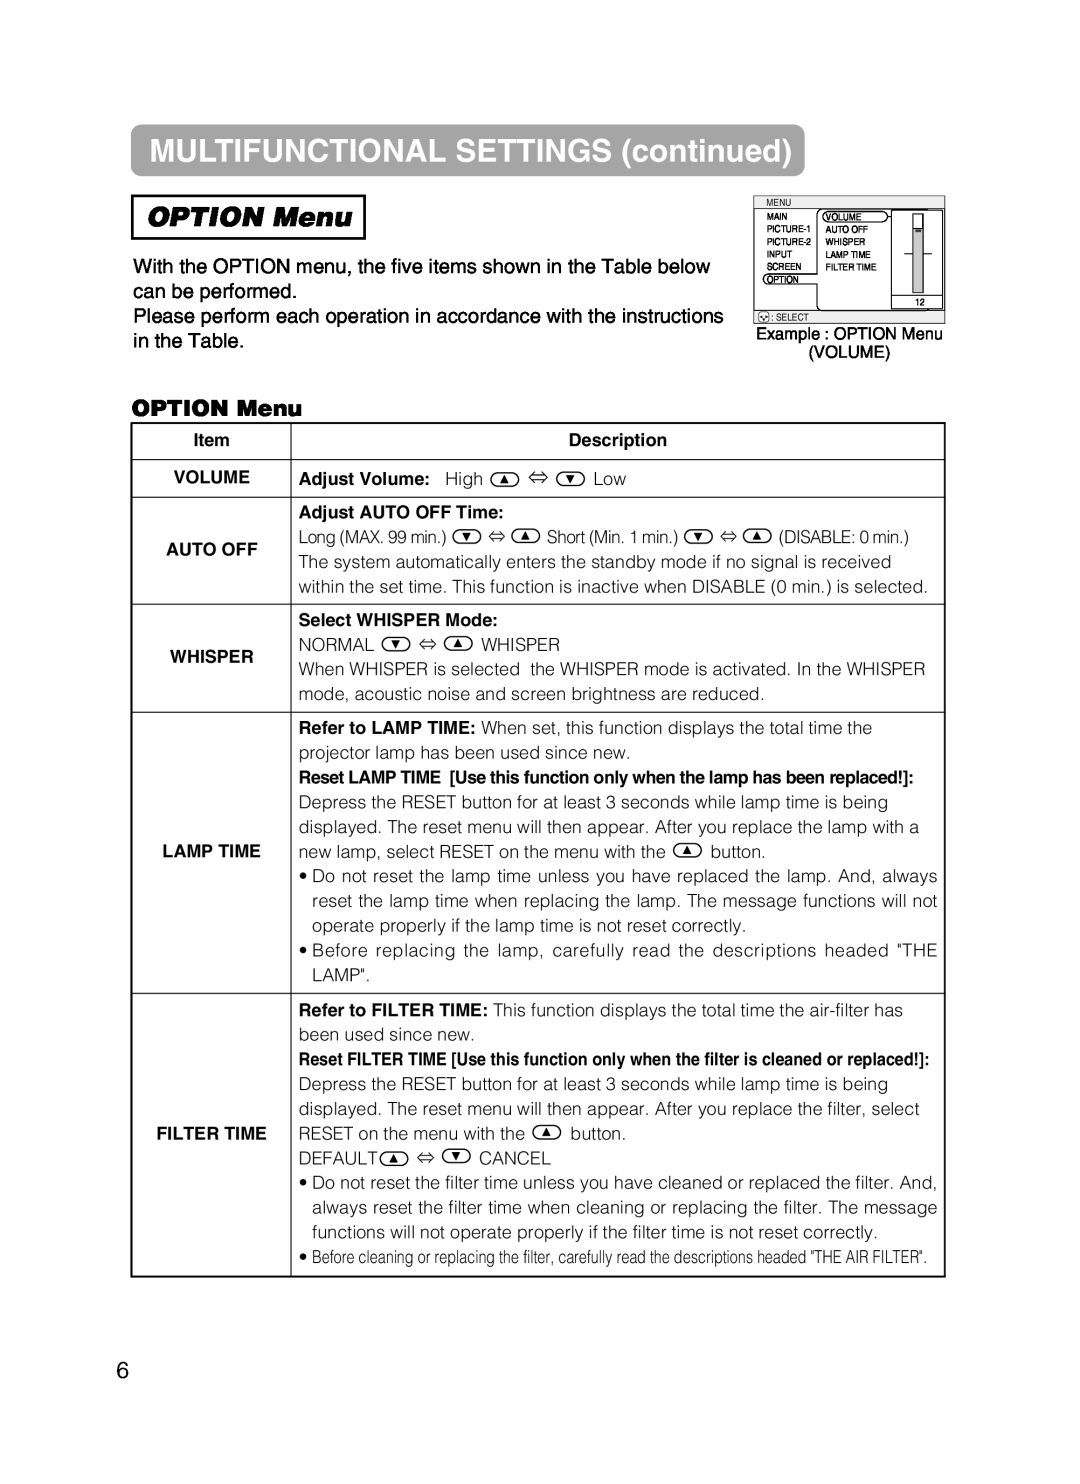 Hitachi CPX385W user manual OPTION Menu, MULTIFUNCTIONAL SETTINGS continued 